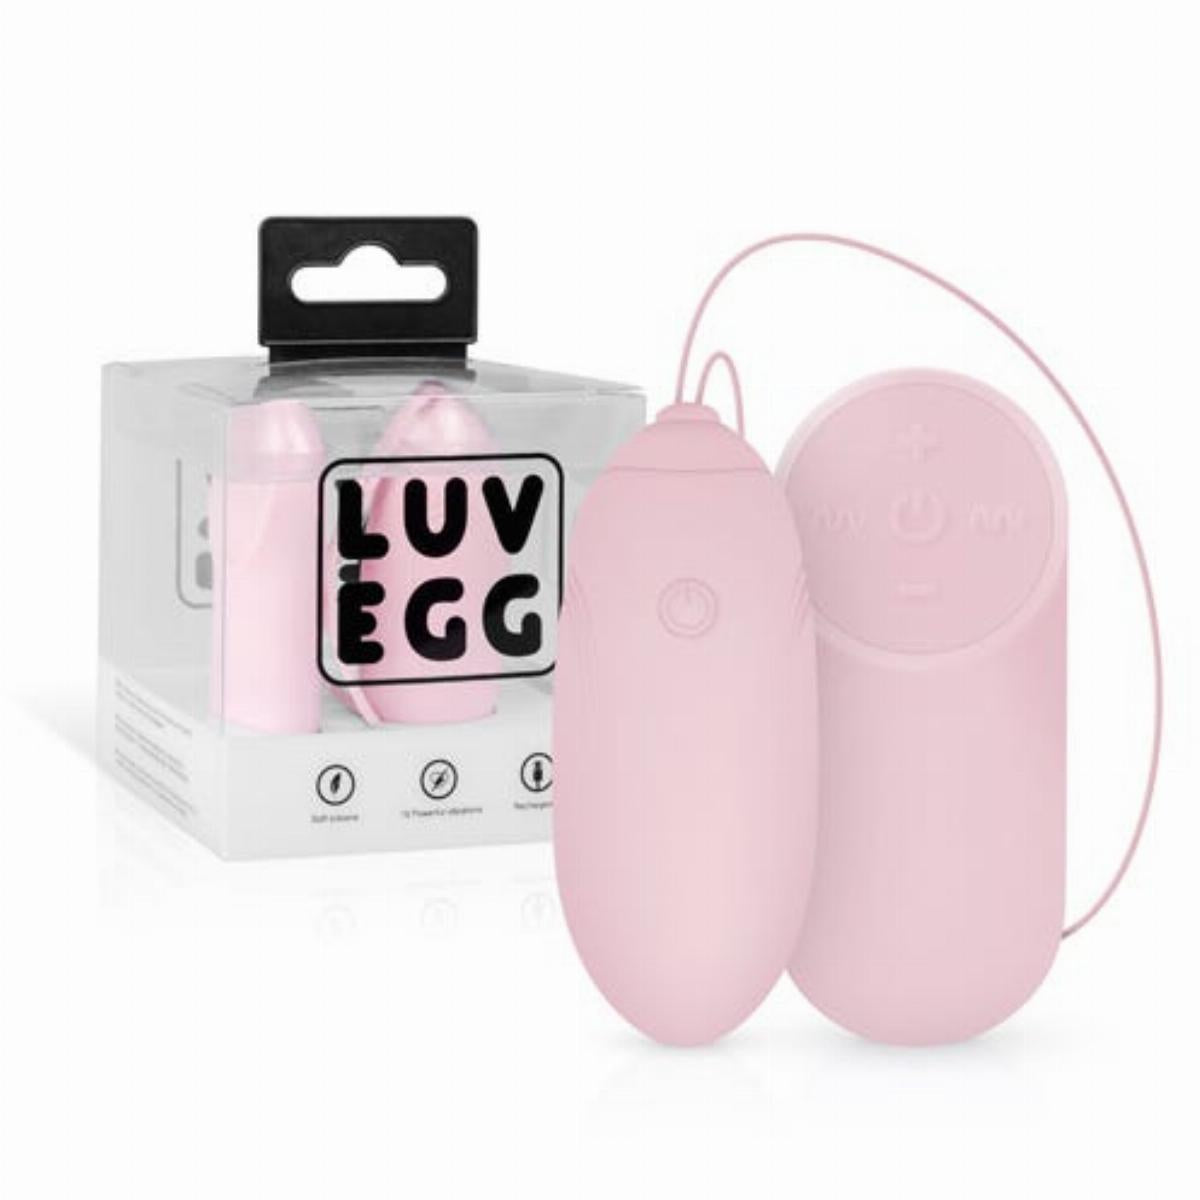 LUV EGG Vibrating Egg Pink